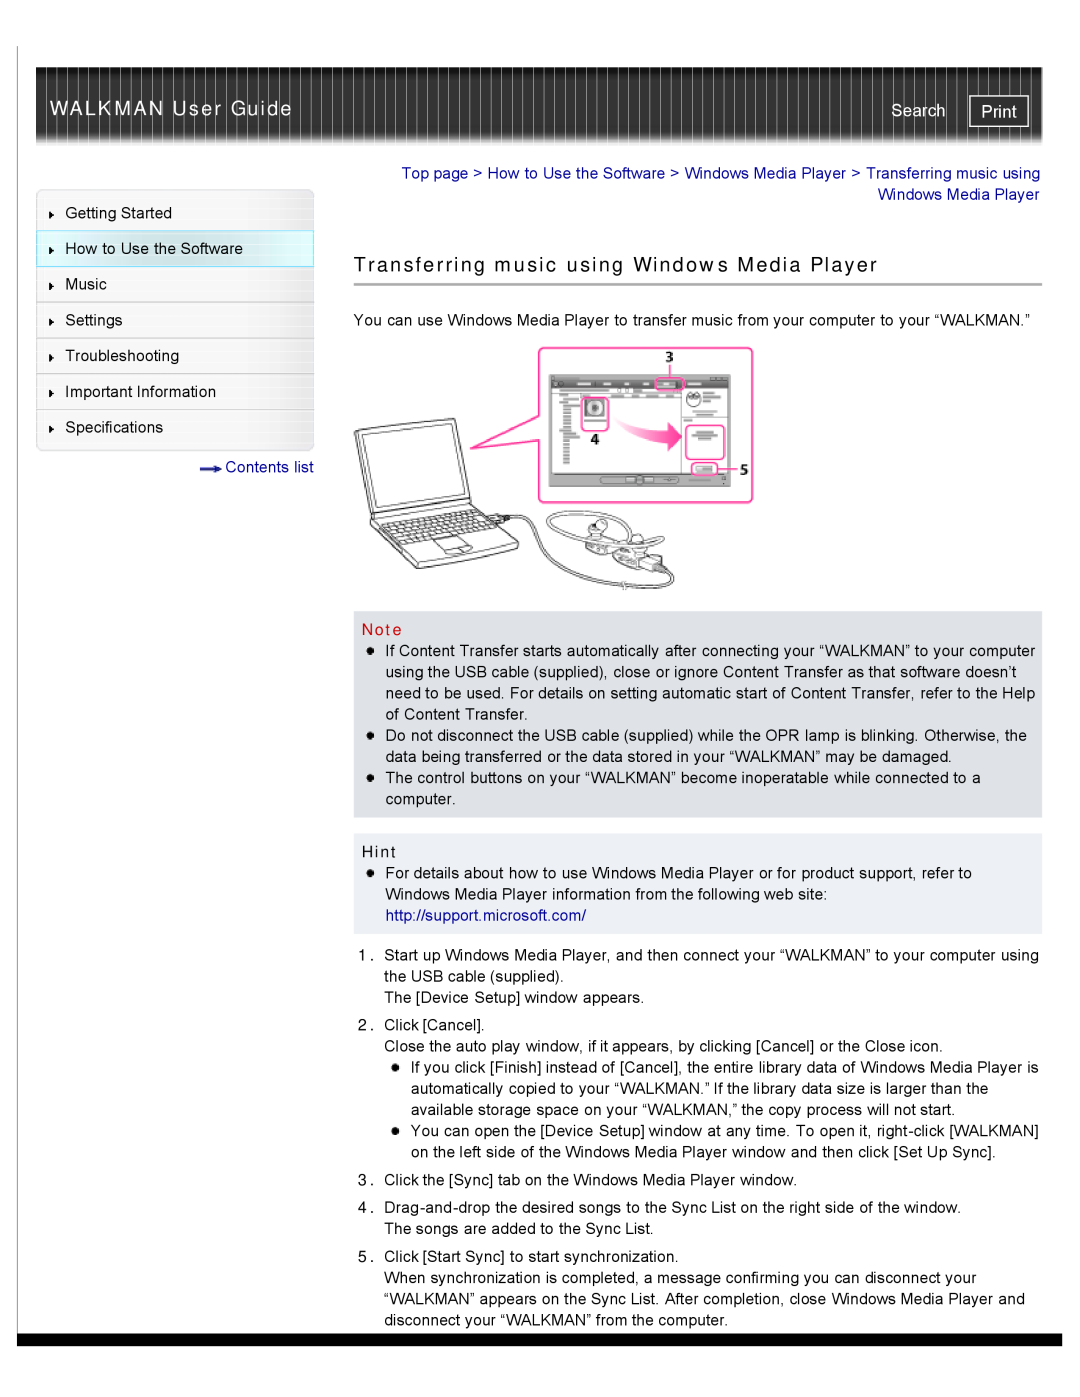 Sony NWZW262BLK, NWZ-W263 Transferring music using Windows Media Player, WALKMAN User Guide, Search, Print, Contents list 